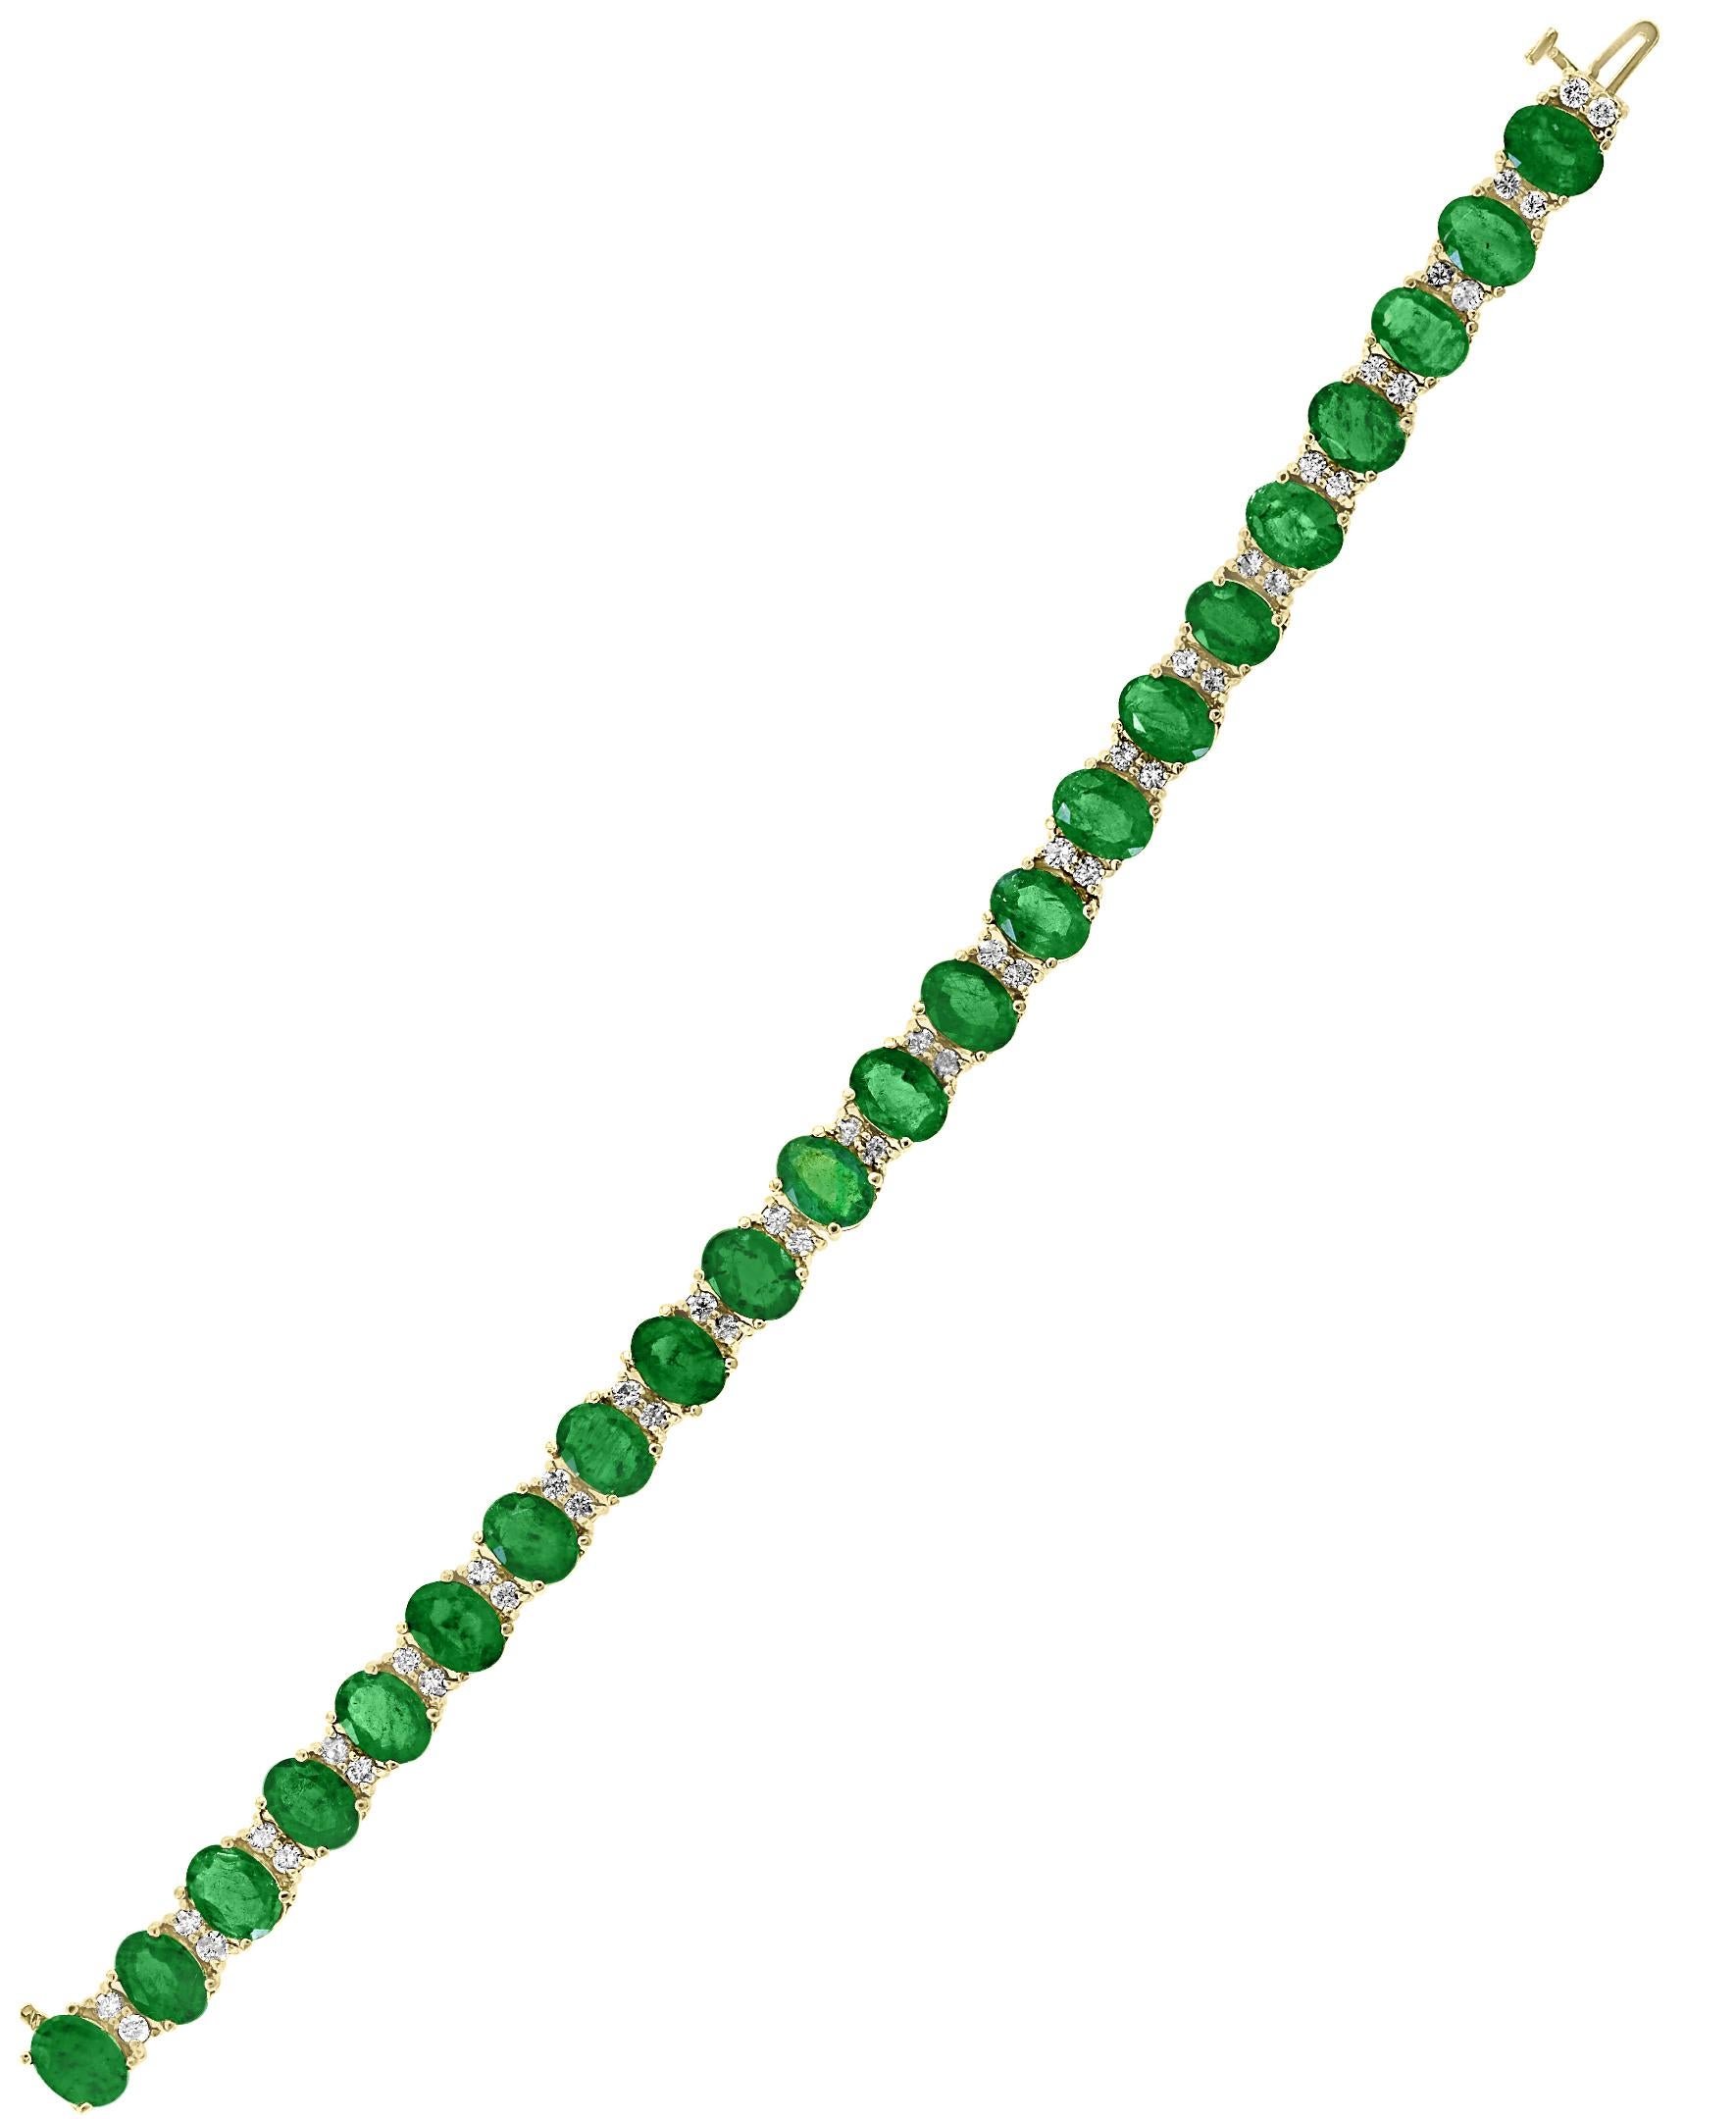 25 carat tennis bracelet